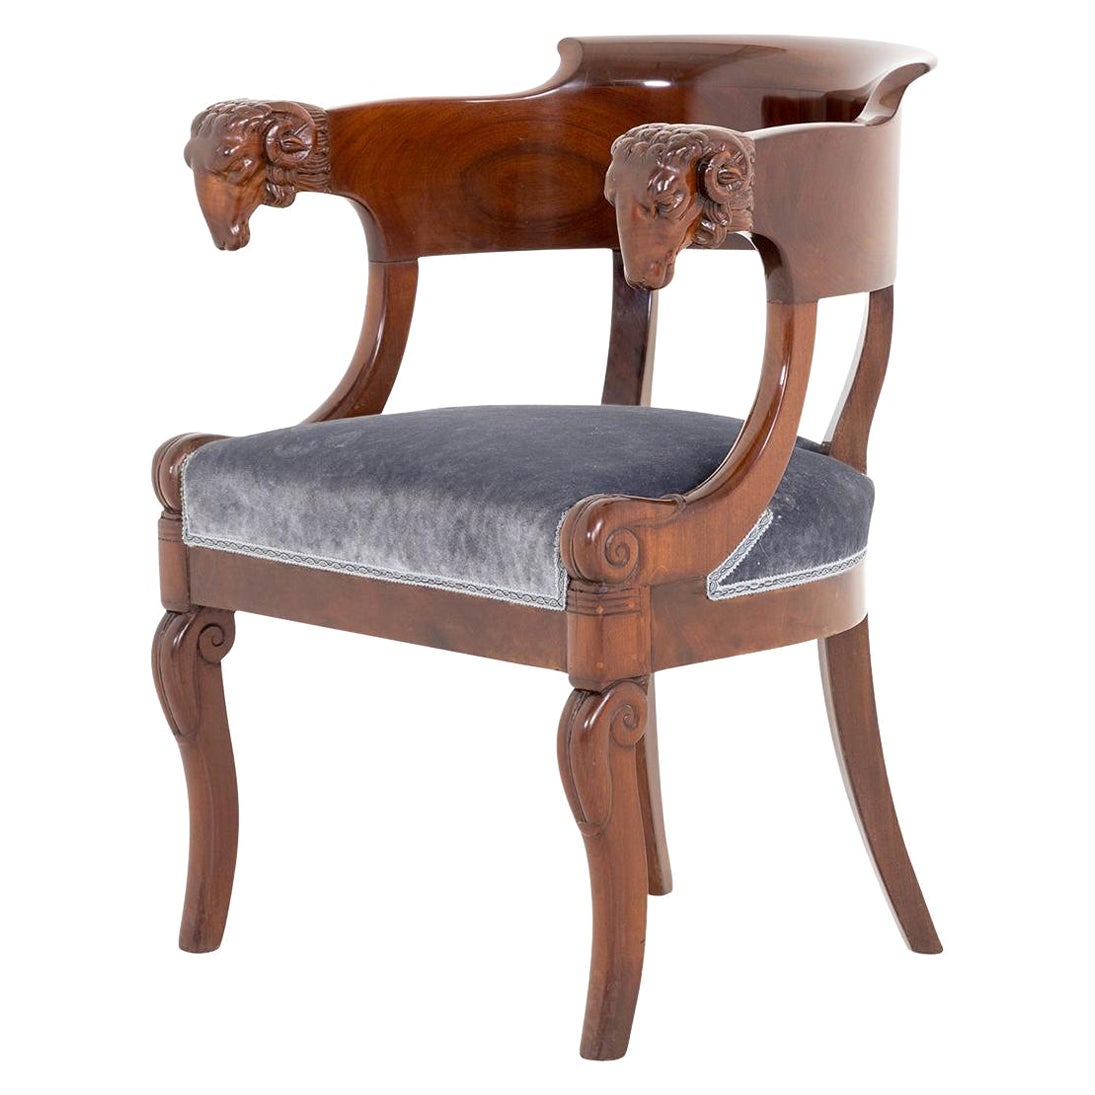 19th Century German Biedermeier Polished Mahogany Armchair - Antique Side Chair For Sale